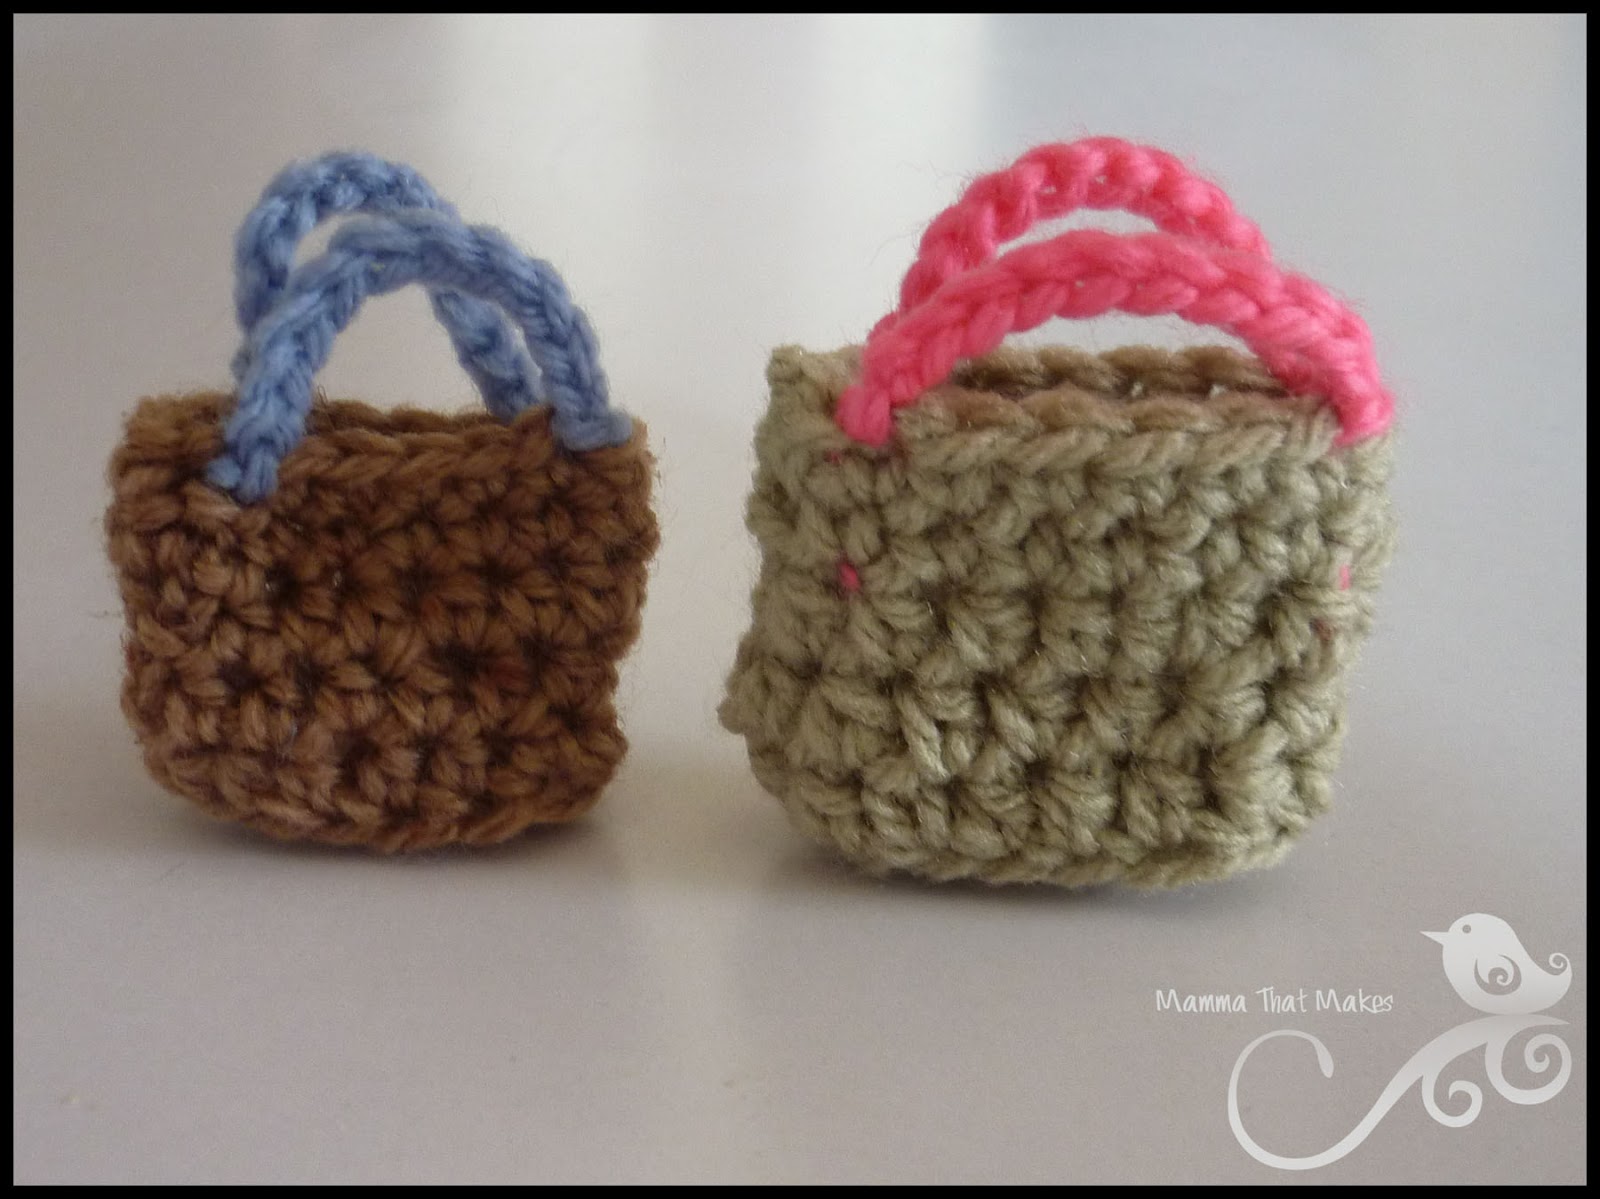 Barbie Duffel Bag or Gym Bag: Free Crochet Pattern - FeltMagnet